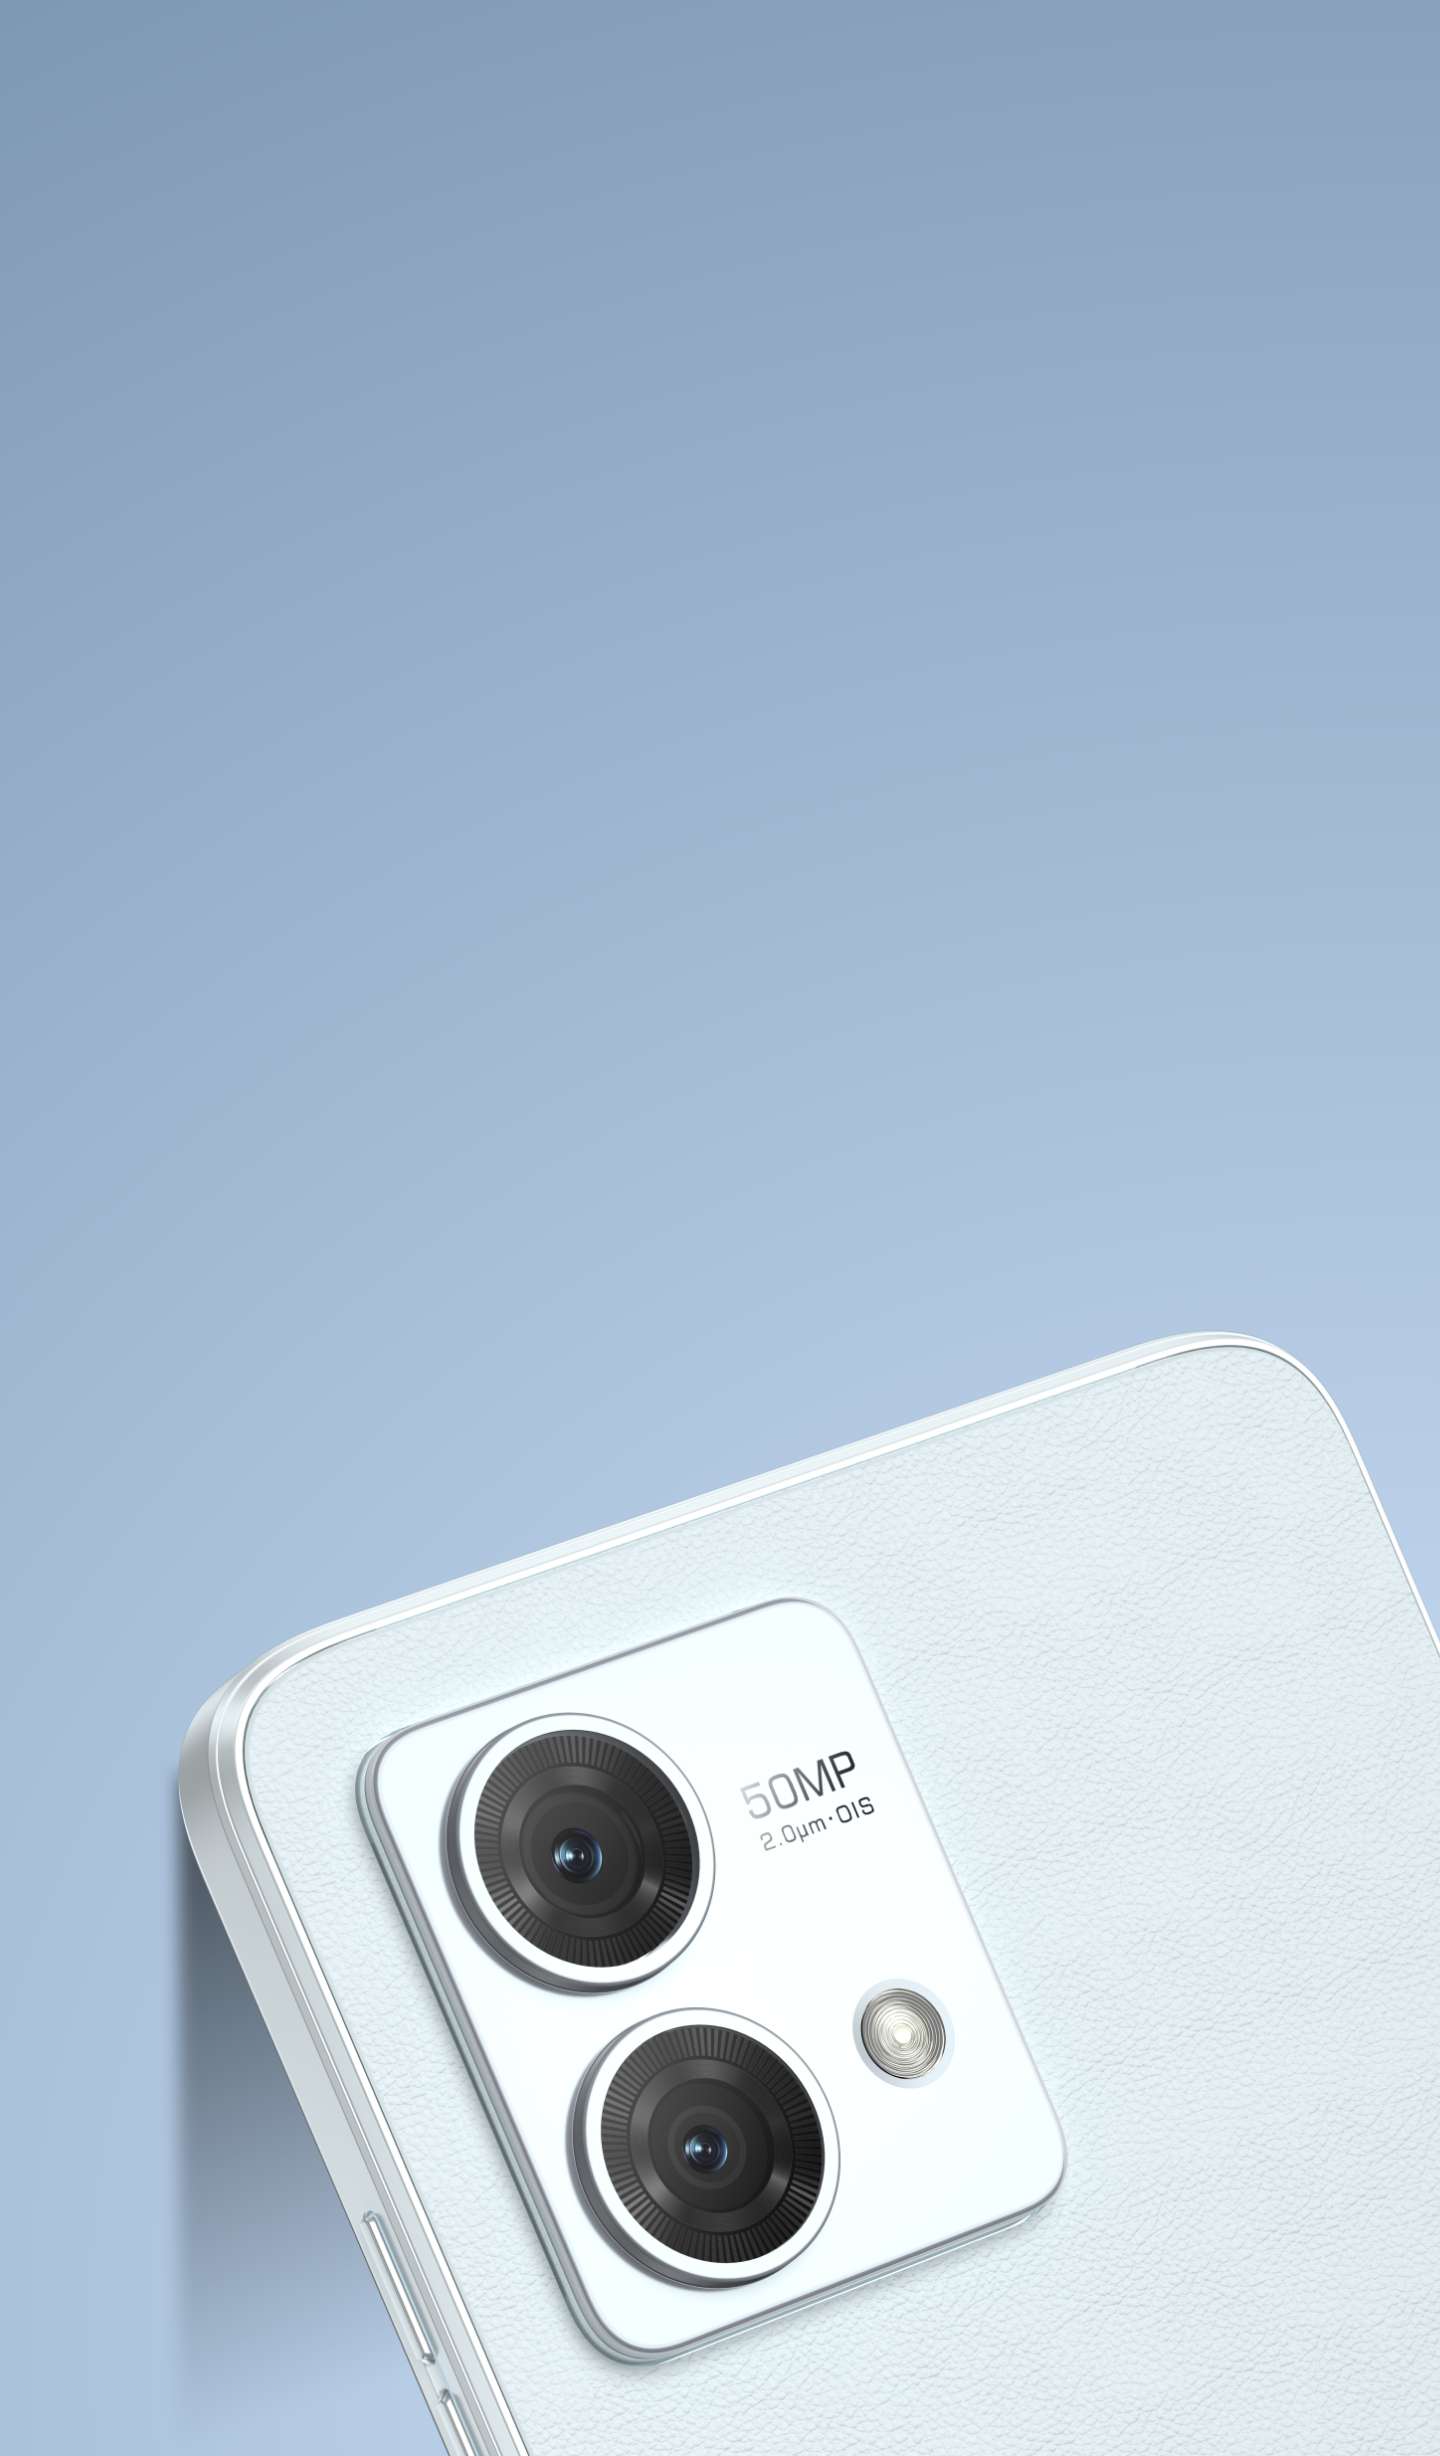 Motorola Moto G84 photo gallery 